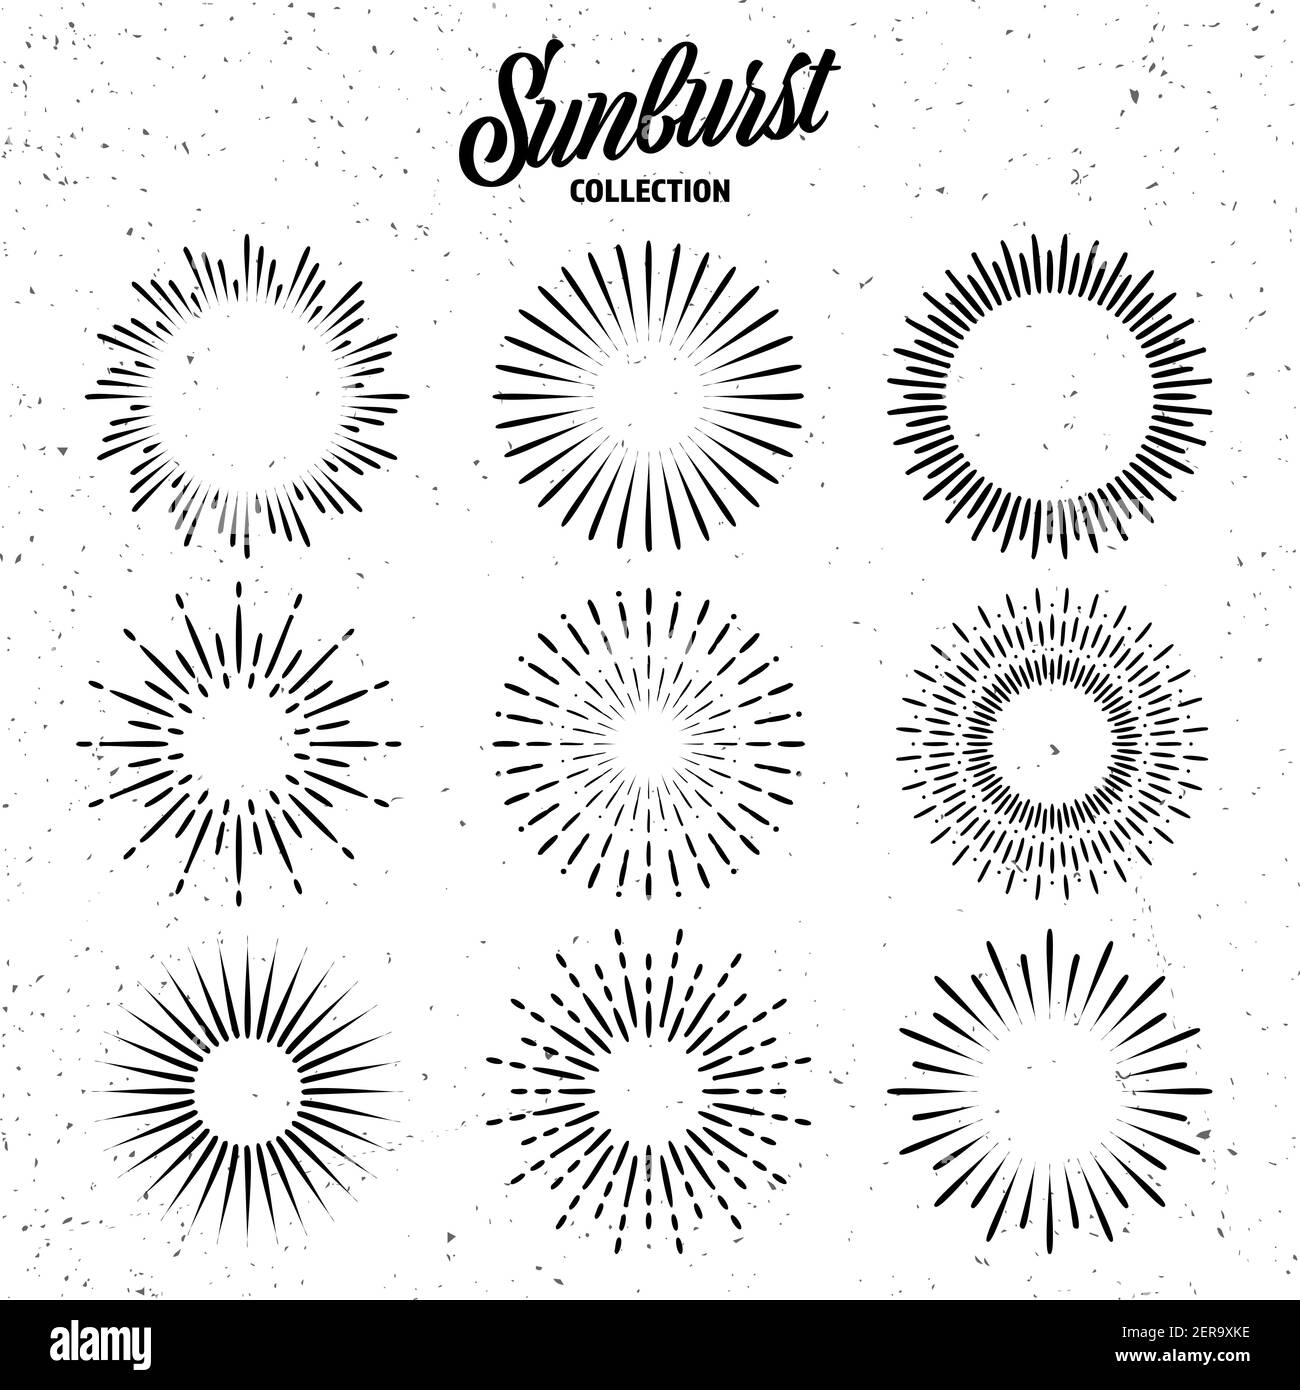 Vintage grunge sunburst collection. Bursting sun rays. Fireworks. Logotype or lettering design element. Radial sunset beams. Vector illustration. Stock Vector